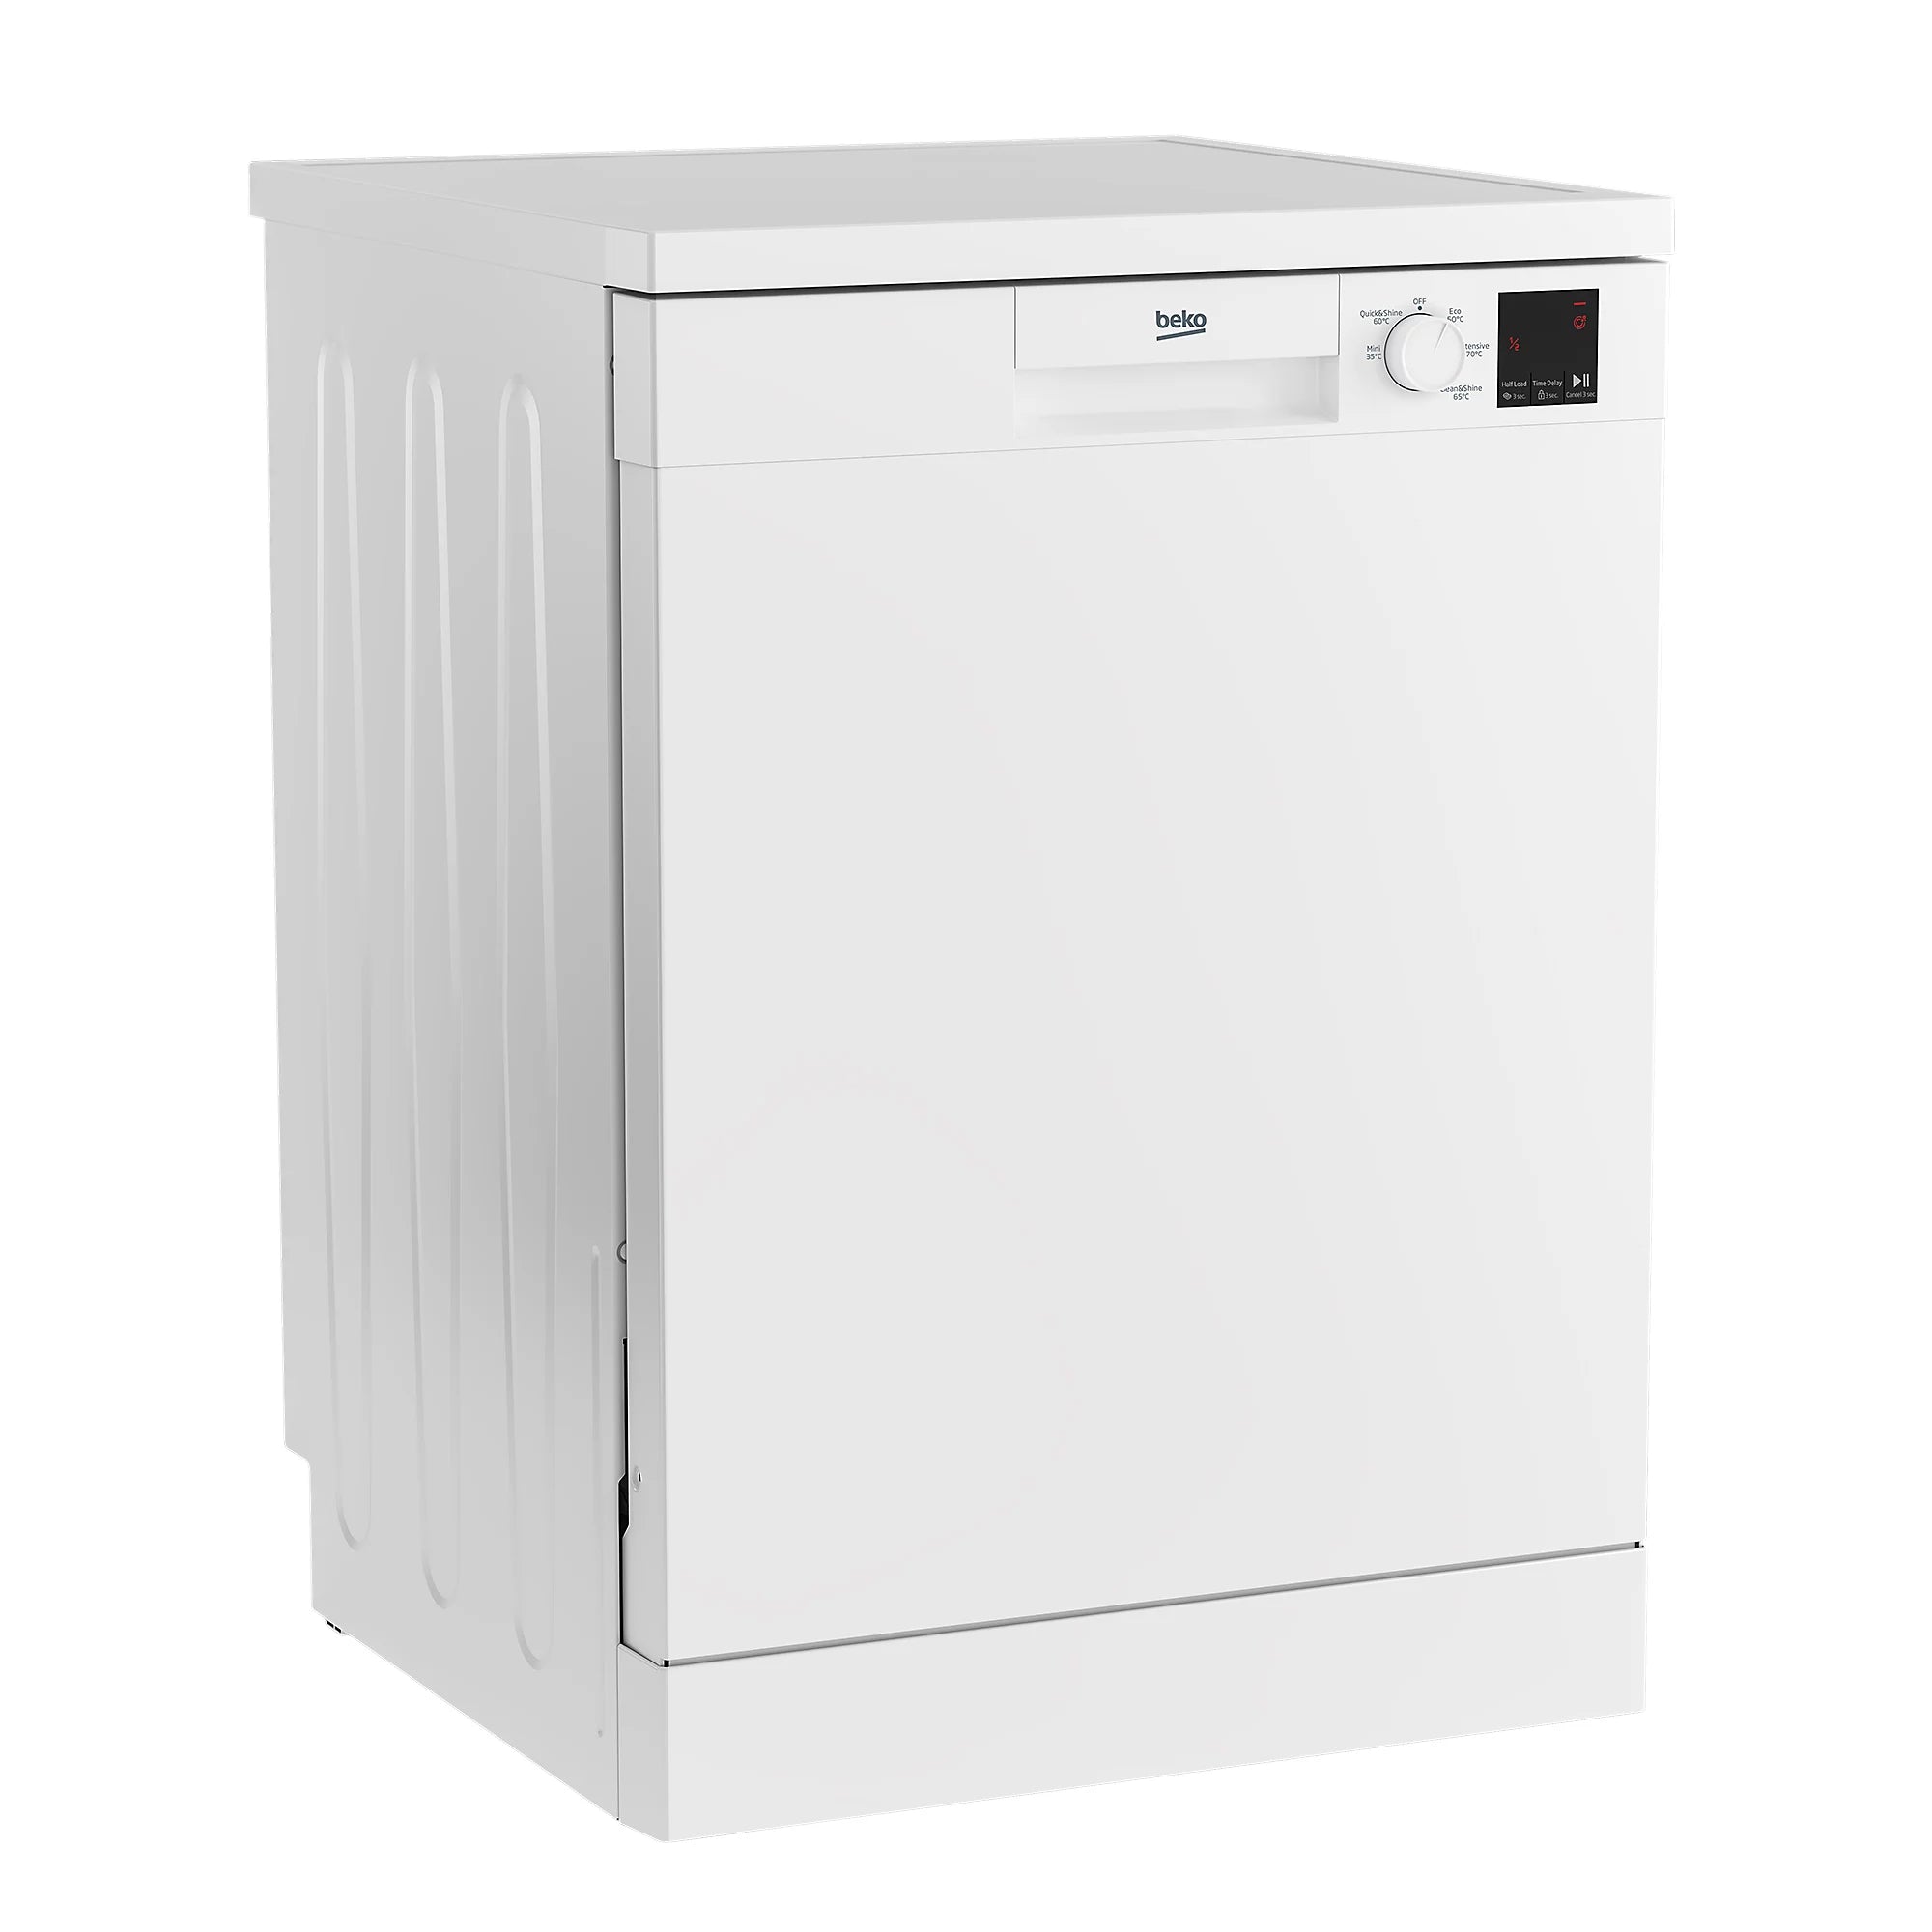 Beko-Freestanding Dishwasher-Full size-White-DFN05Q10W-6030